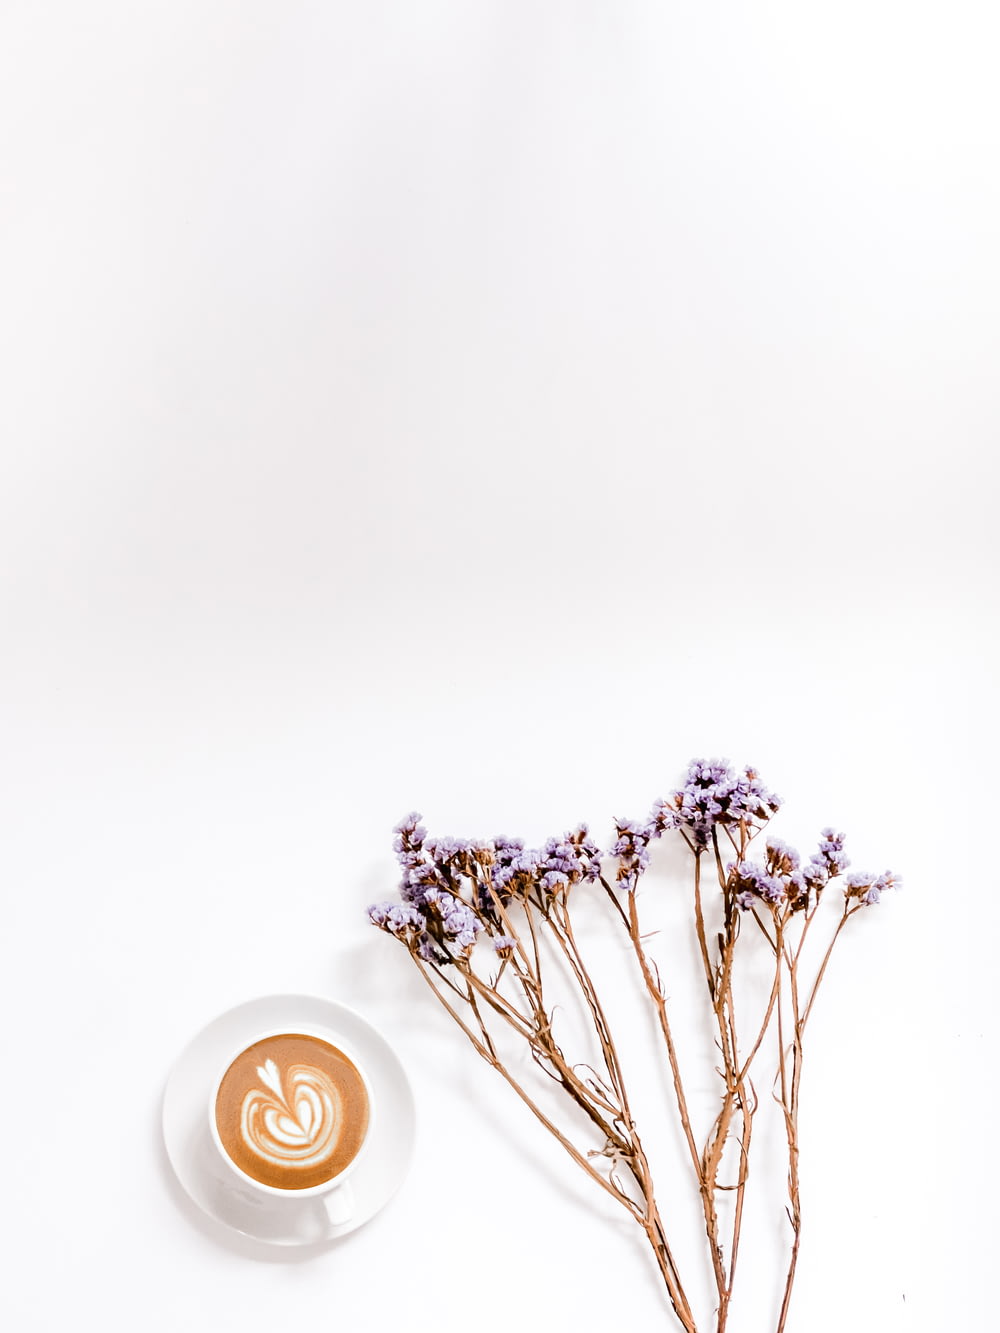 cappuccino beside purple-petaled flowers